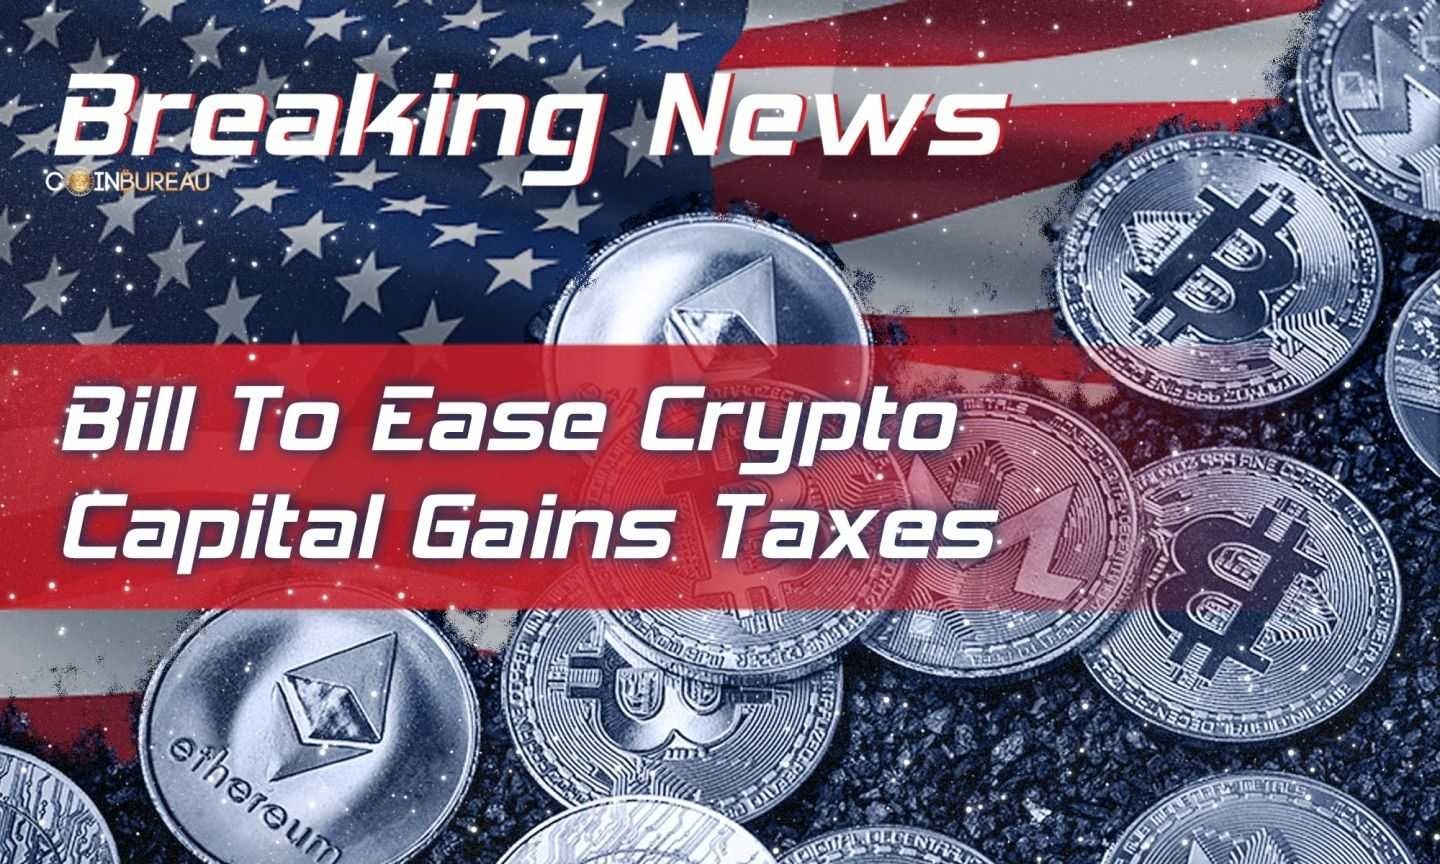 US Senators Propose Rule To Ease Crypto Capital Gains Taxes